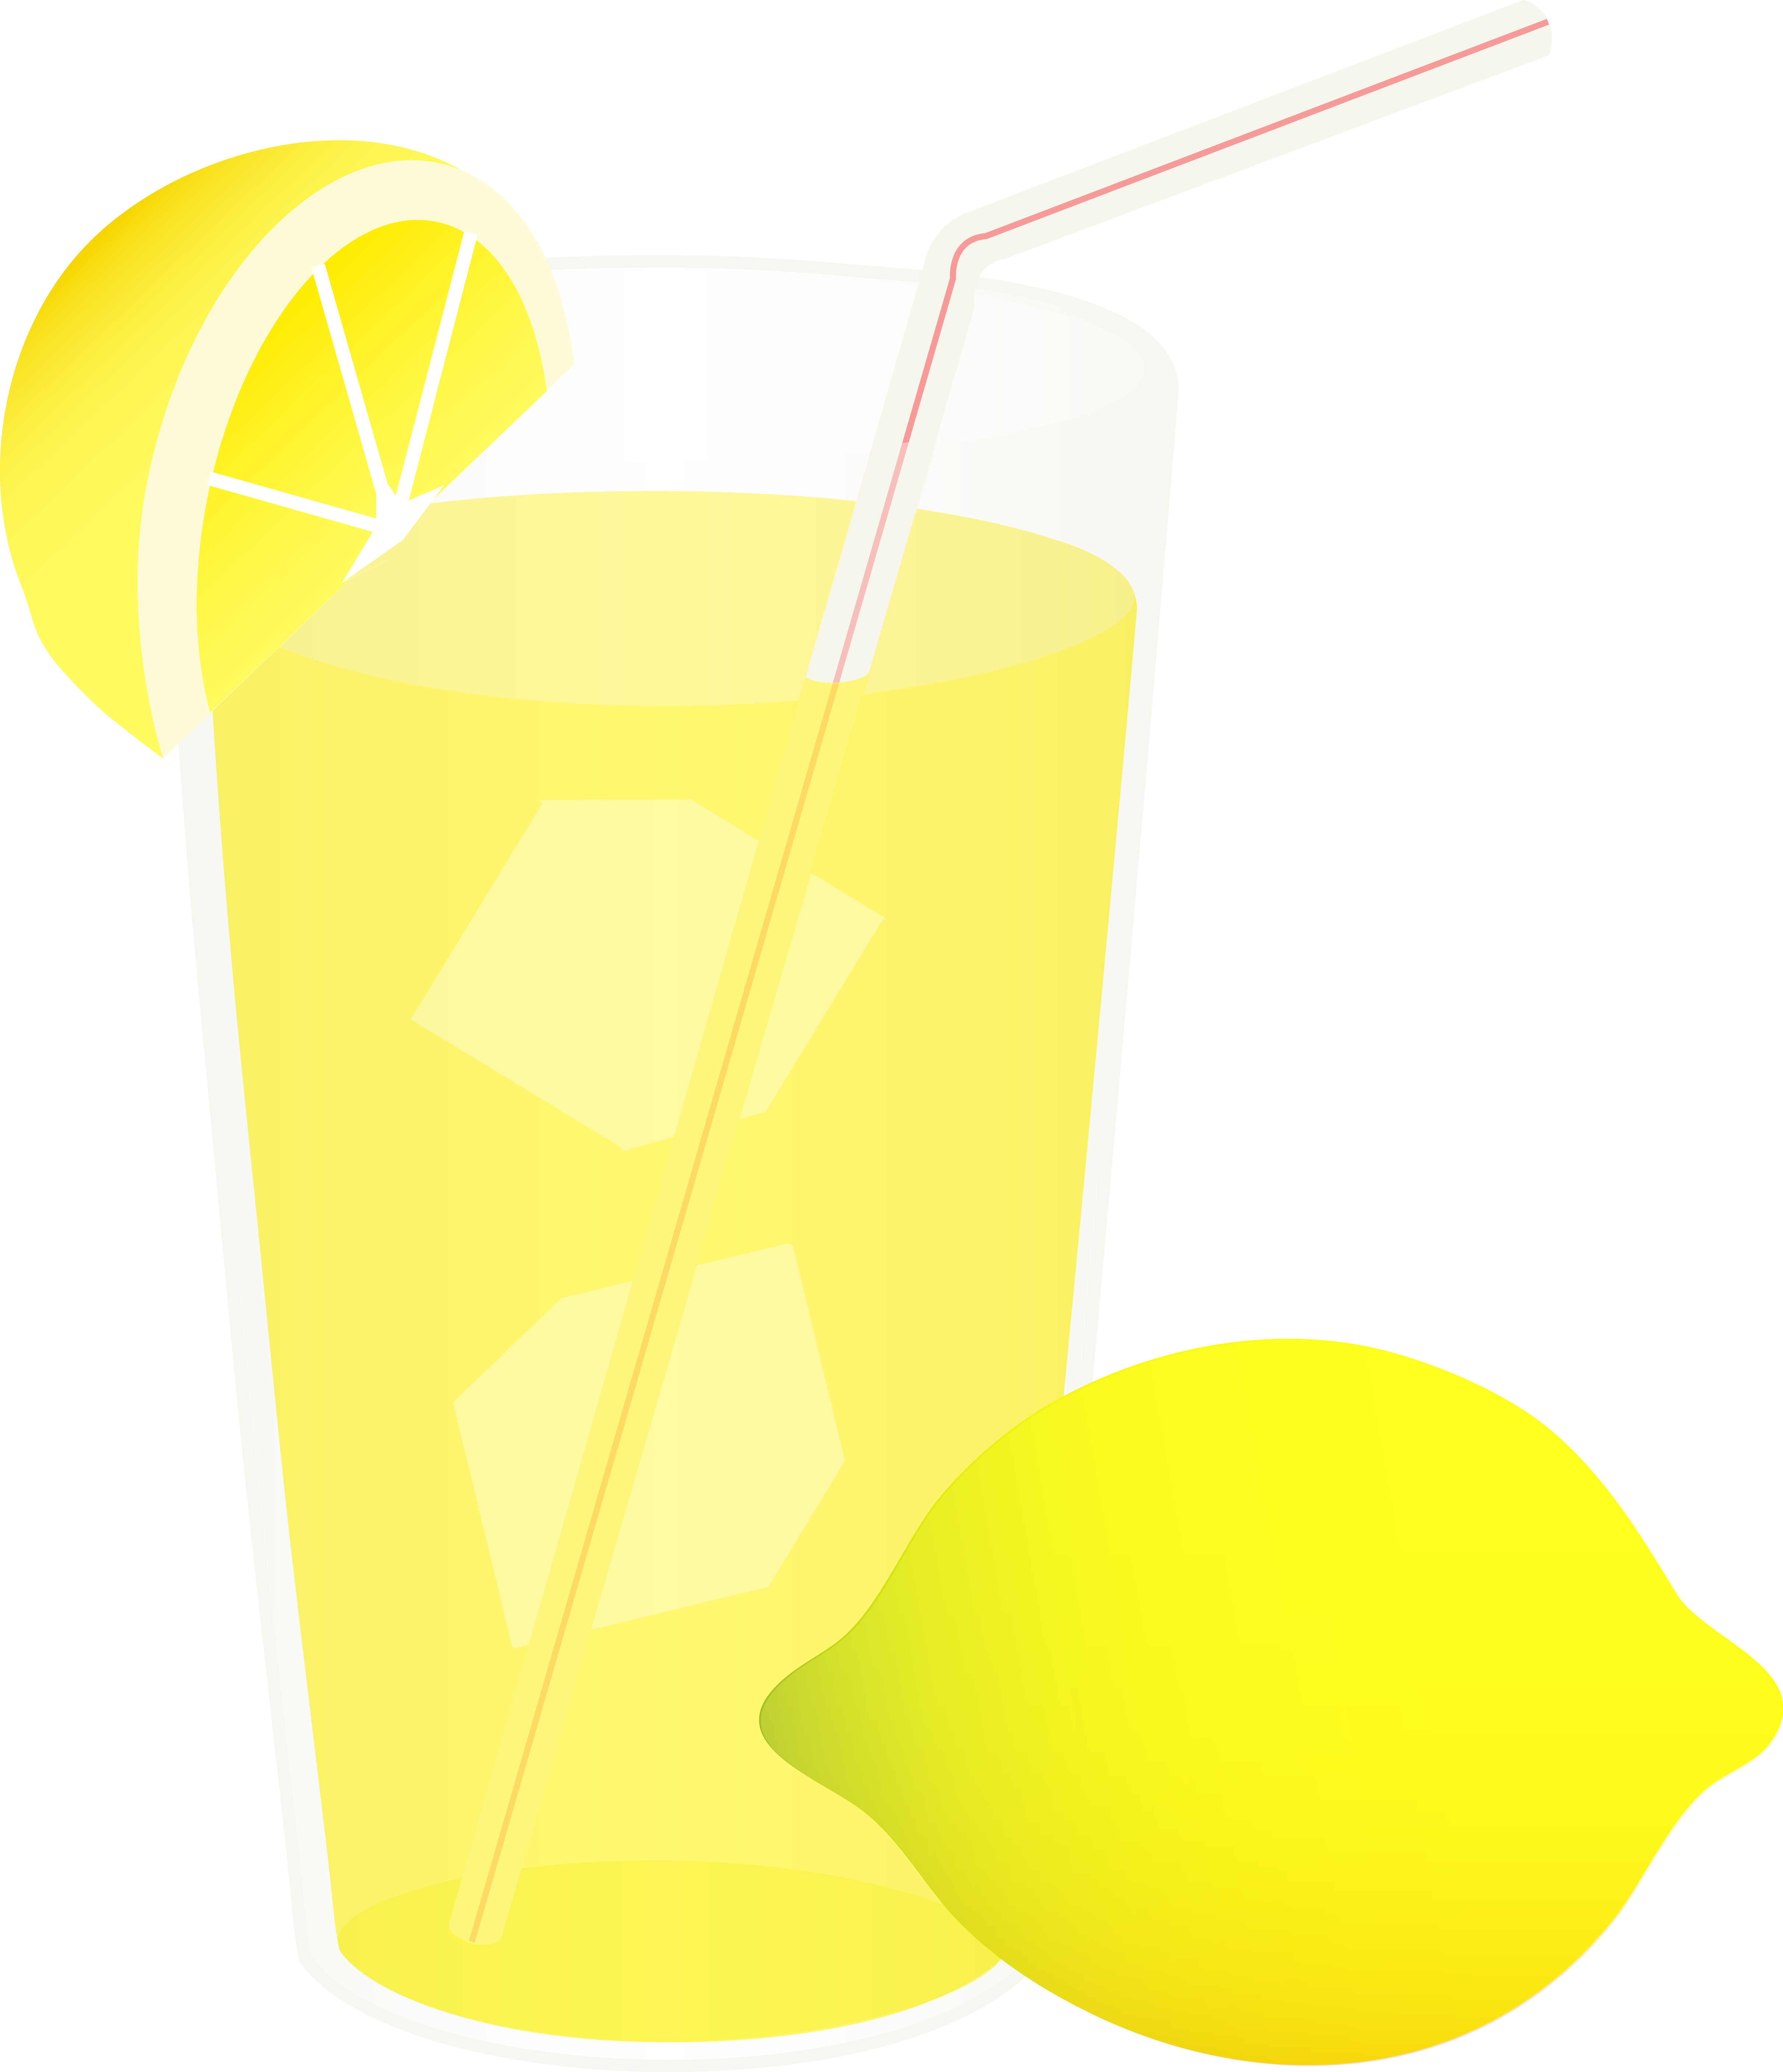 Clipart Glass Of Lemonade Wit